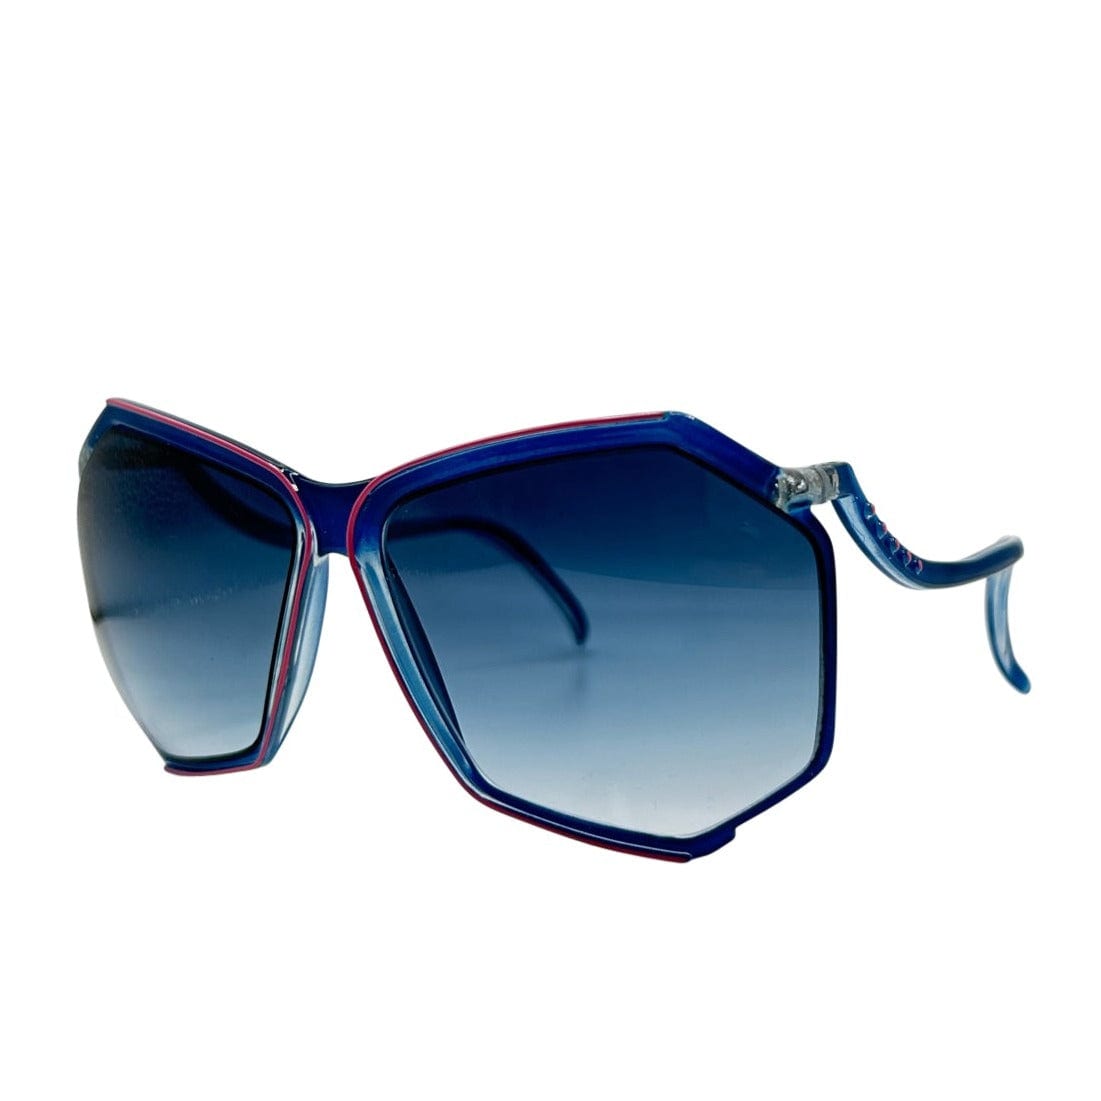 BOOGIE Blue 80s Sunglasses